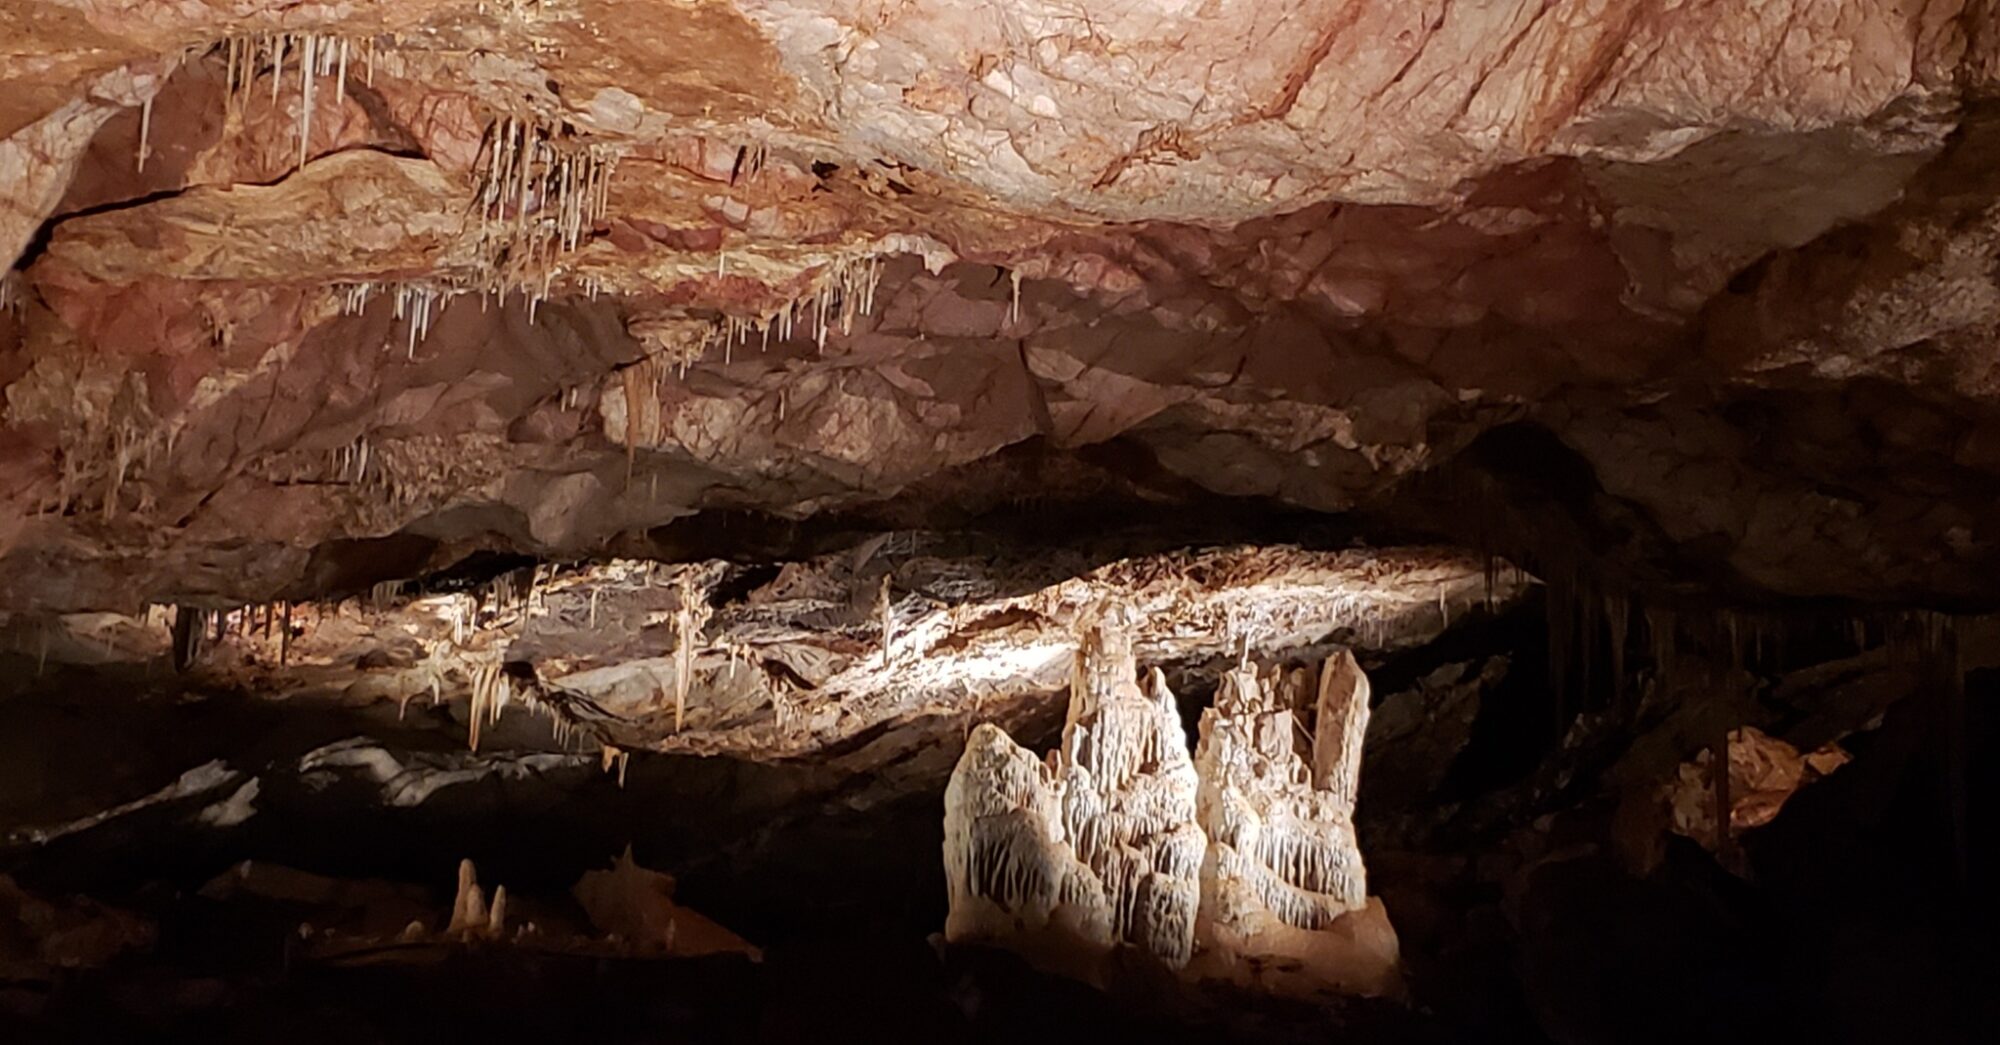 Stalactites and Stalagmites inside the Kartchner Caverns in Arizona.